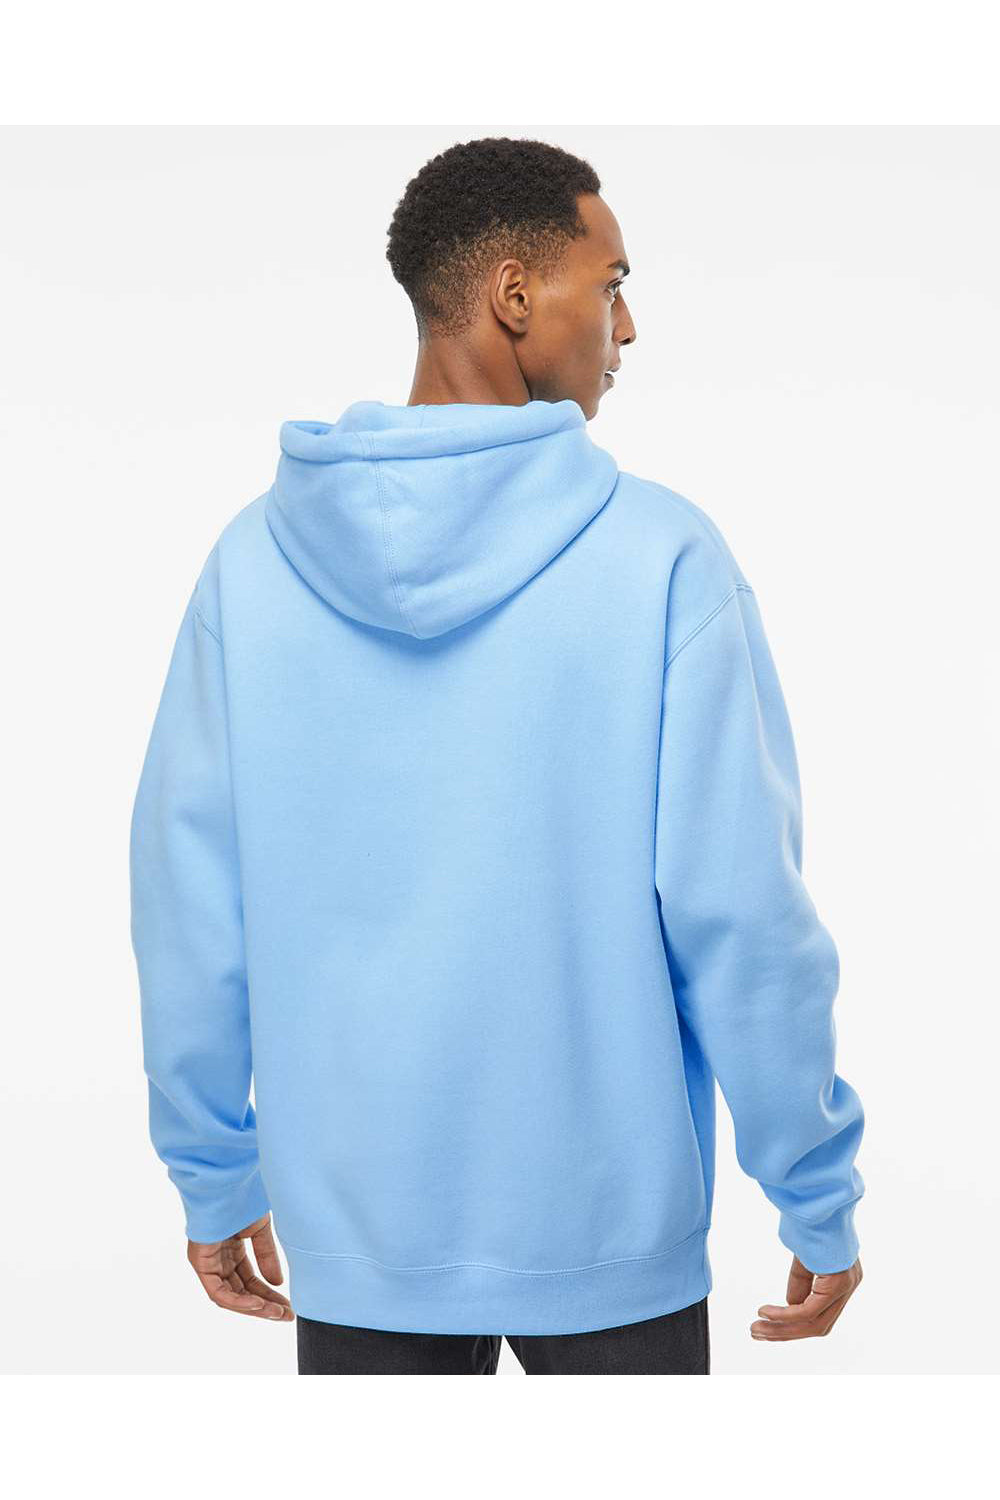 Independent Trading Co. IND4000 Mens Hooded Sweatshirt Hoodie Aqua Blue Model Back